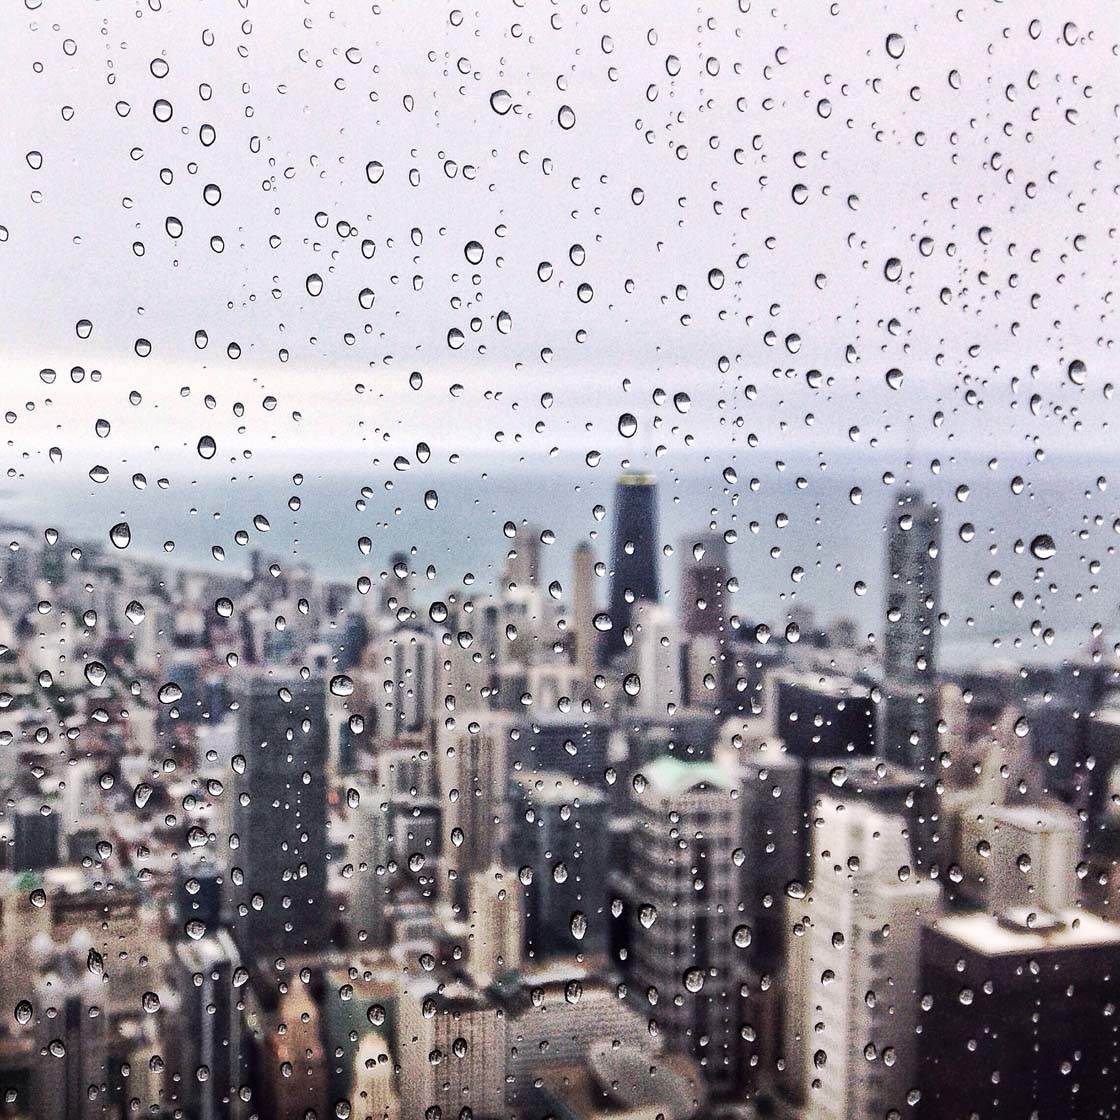 Raindrops on a window overlooking a city - Rain